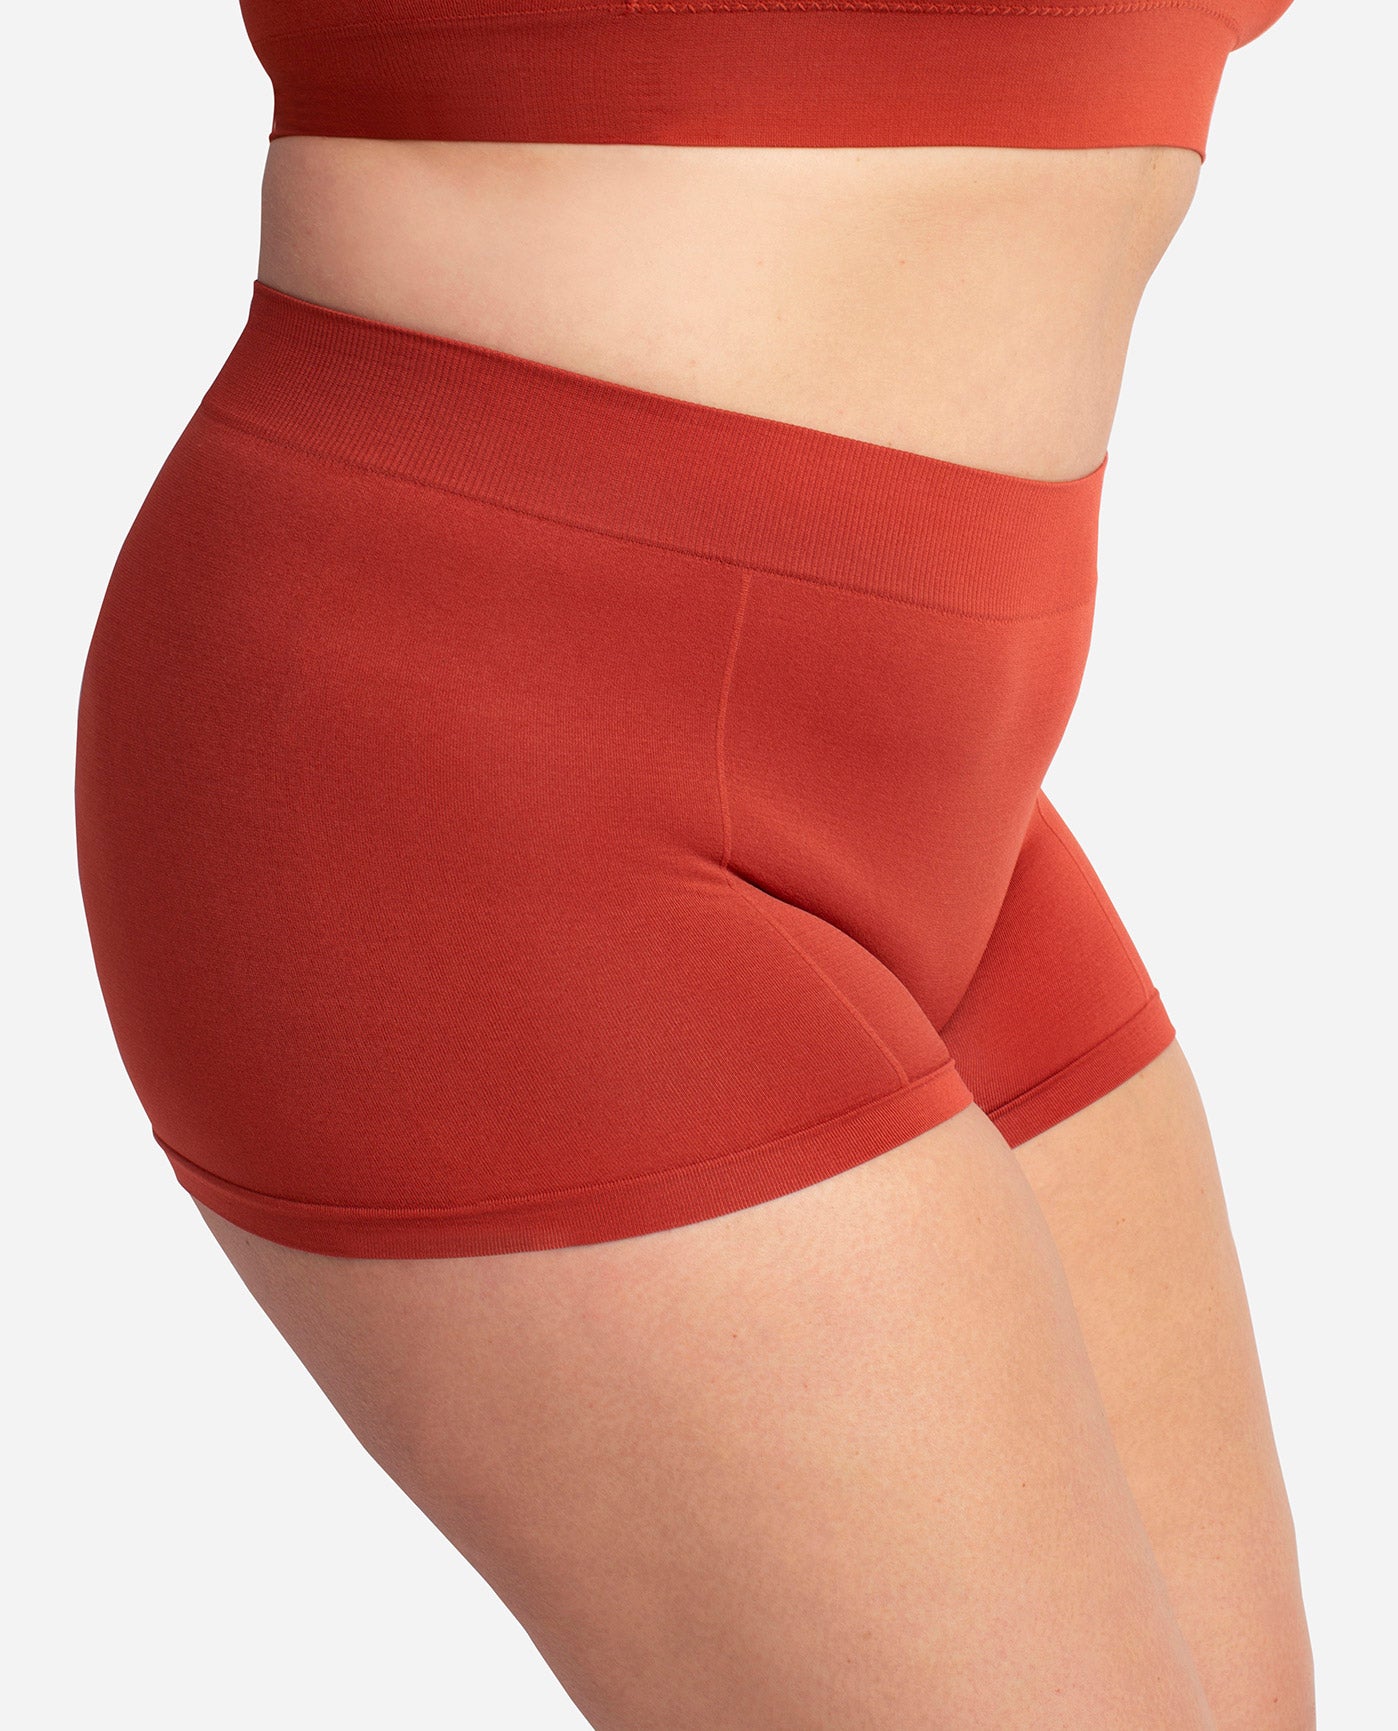 Buy ELEG & STILANCE Women's Boyshort Underwear for Boy Shorts Panties 3Pack  Rshoty_Multicolor_S at